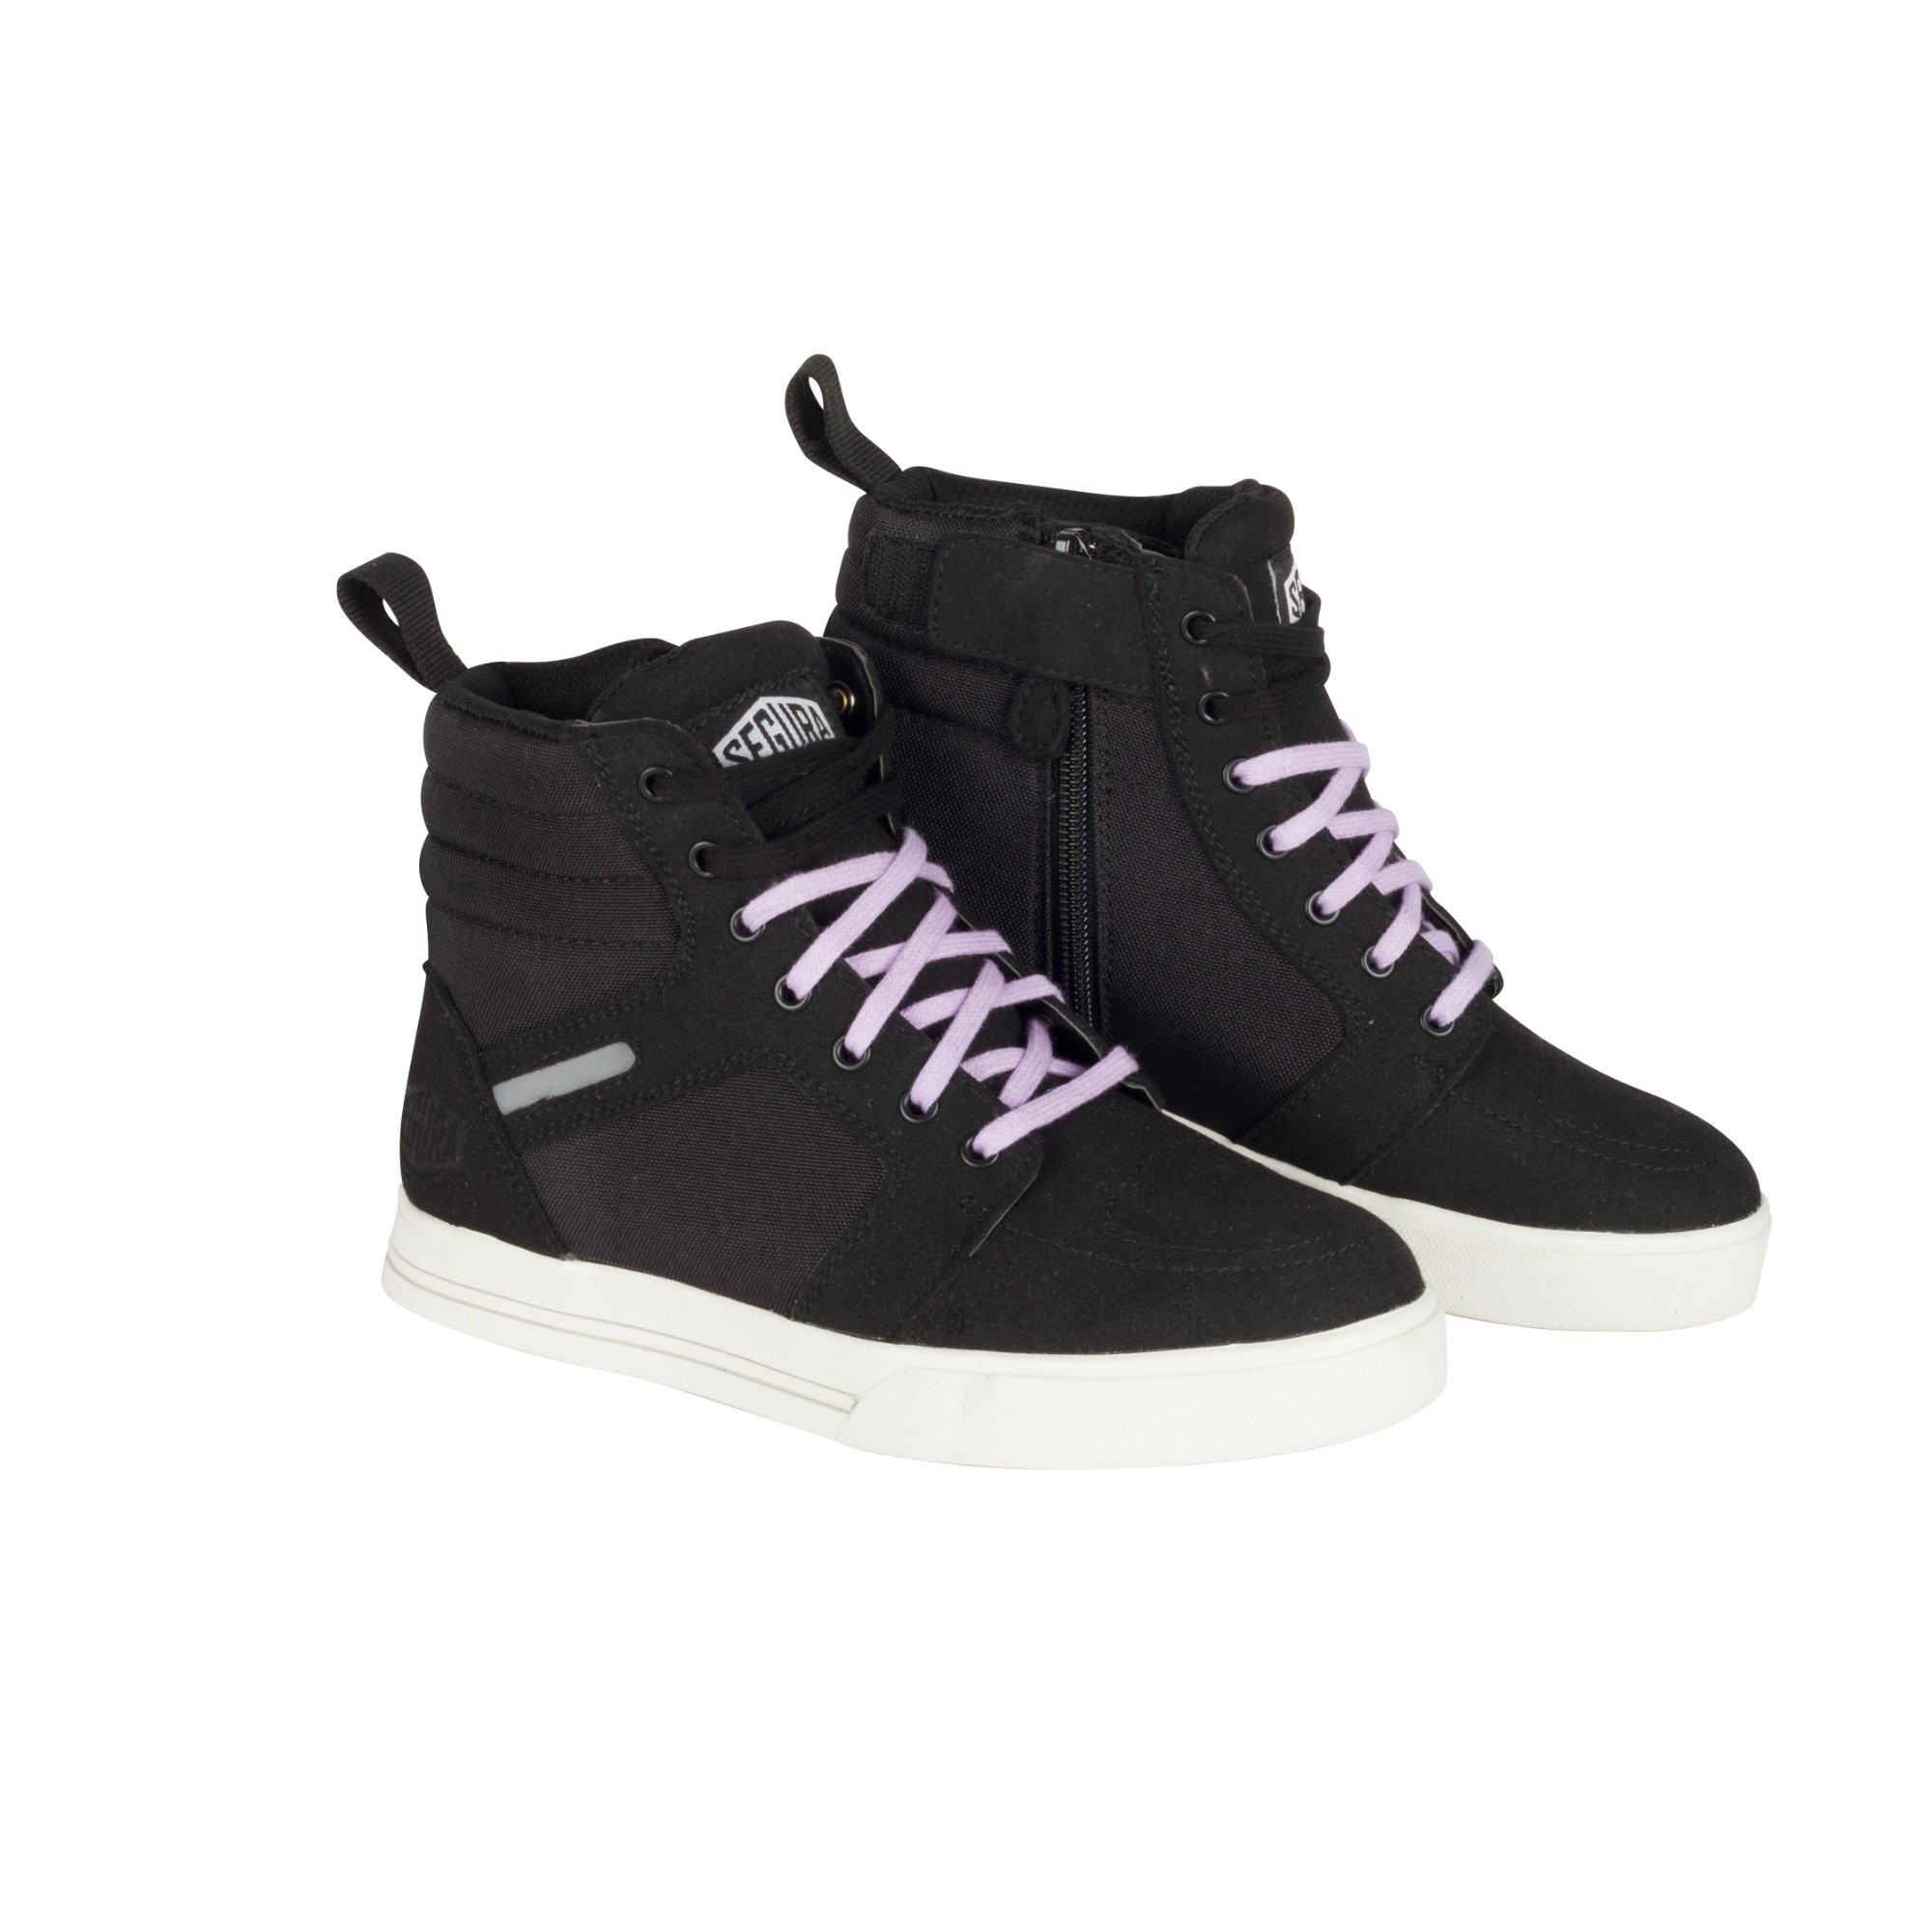 Image of Segura Lady Santana Sneakers Black Lilac Size 41 ID 3660815184196